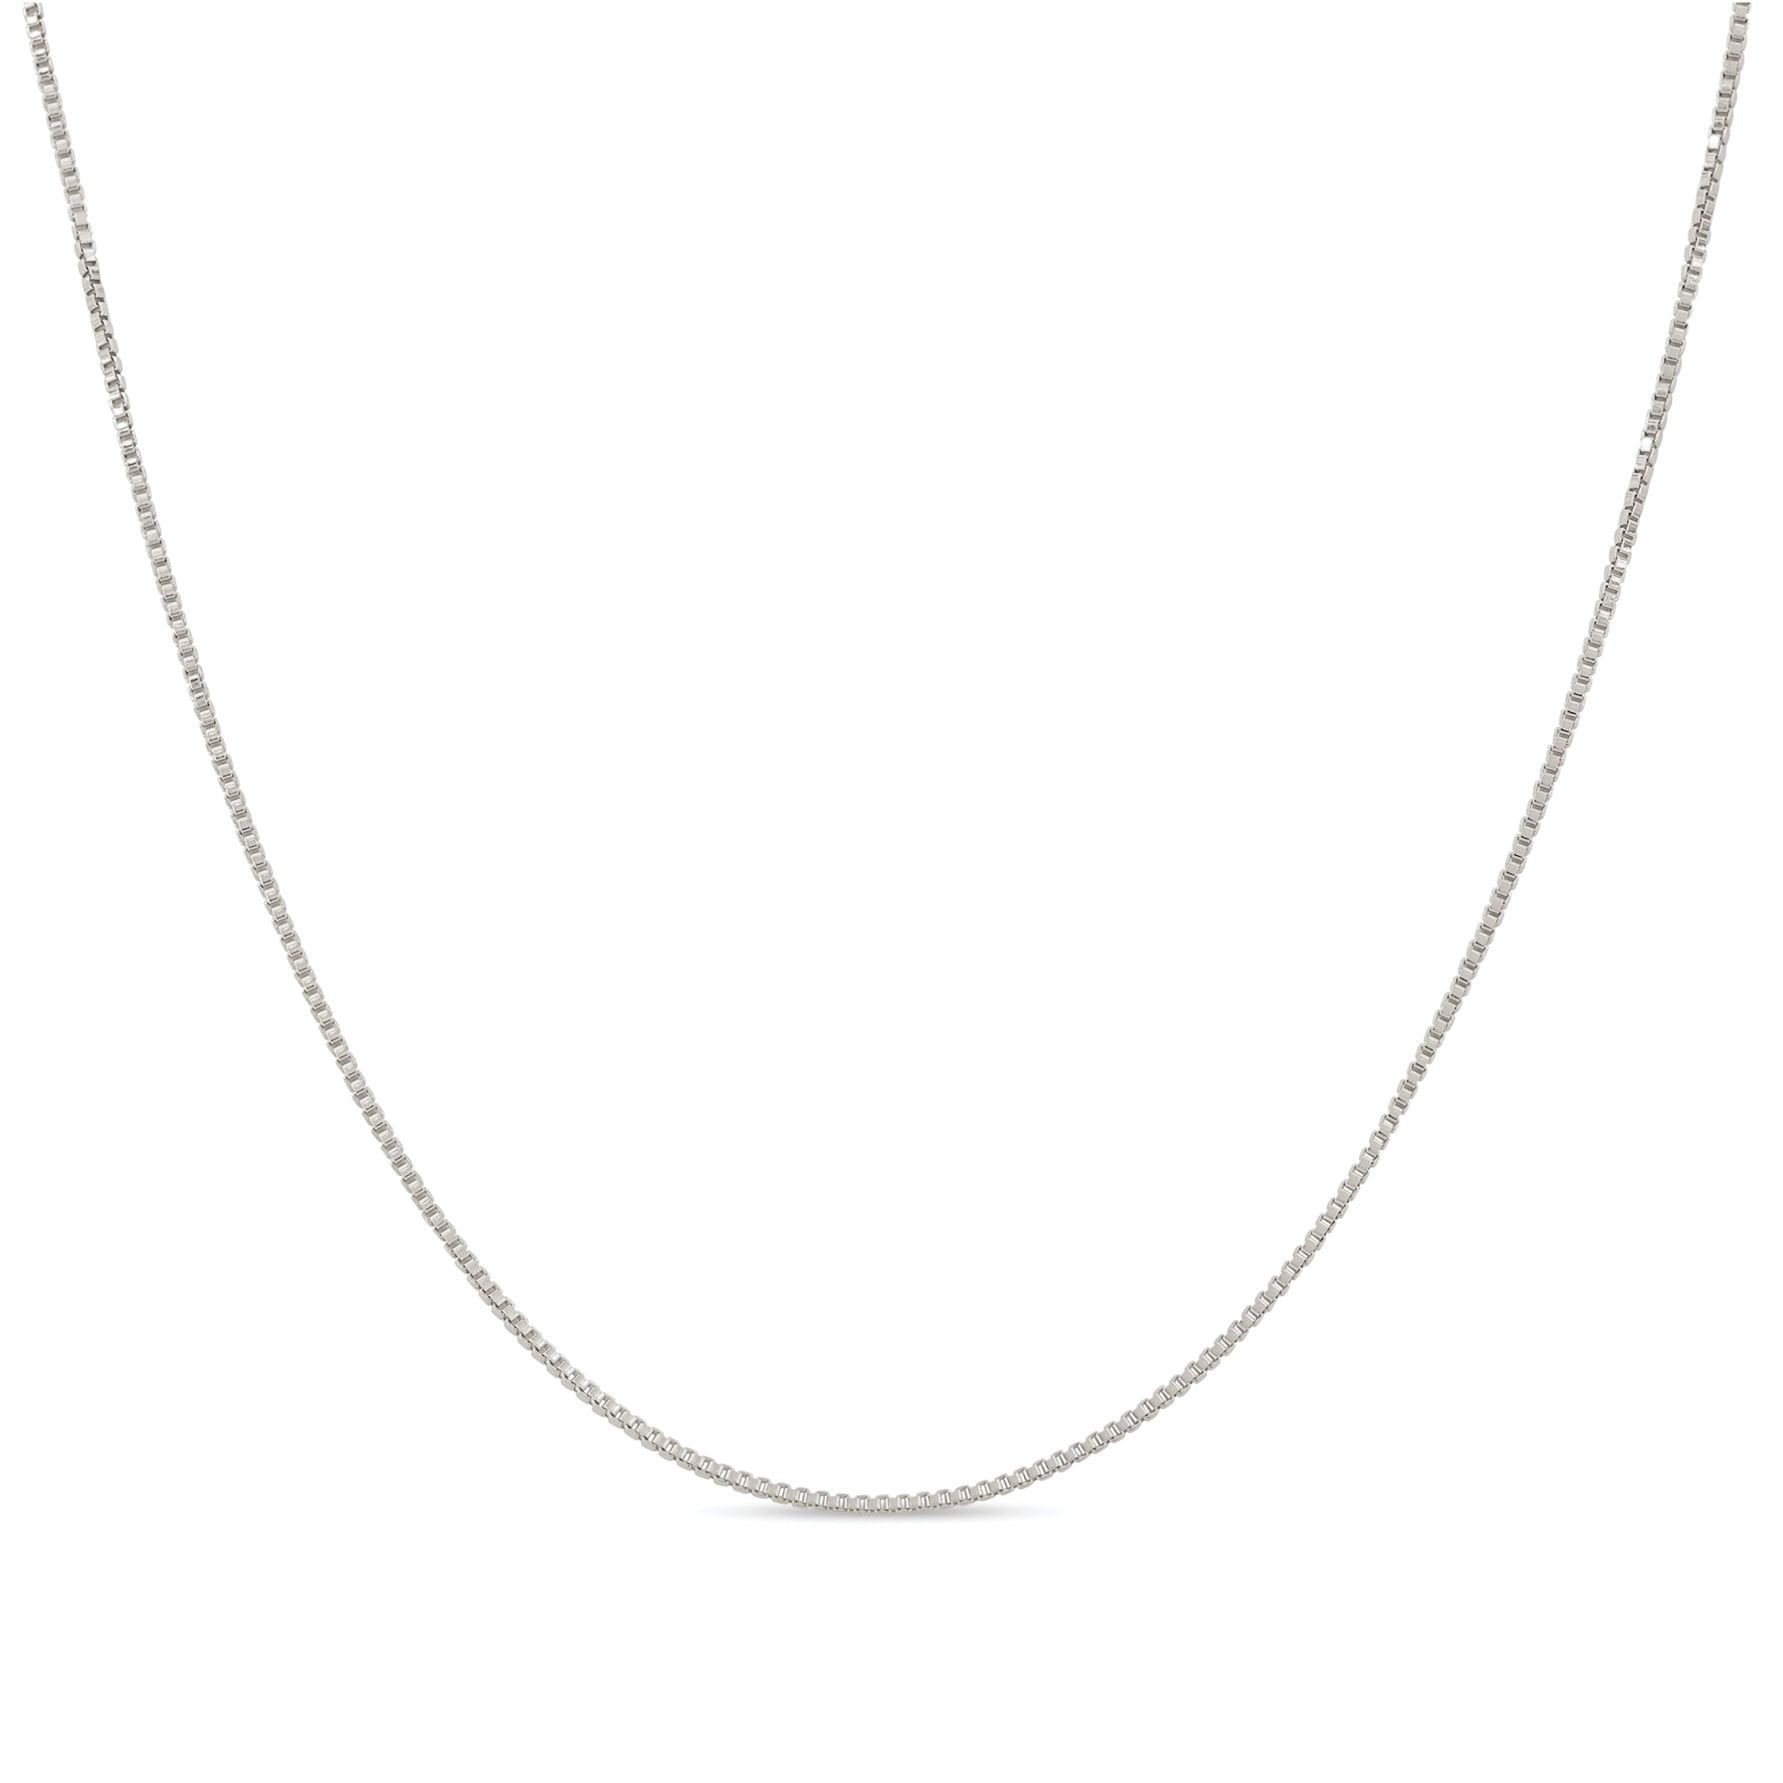 Mens necklace 2019 New Sunflower Glass Cabochon Pendant Necklace Female Wholesale Fashion Necklace Best Friend Gift 